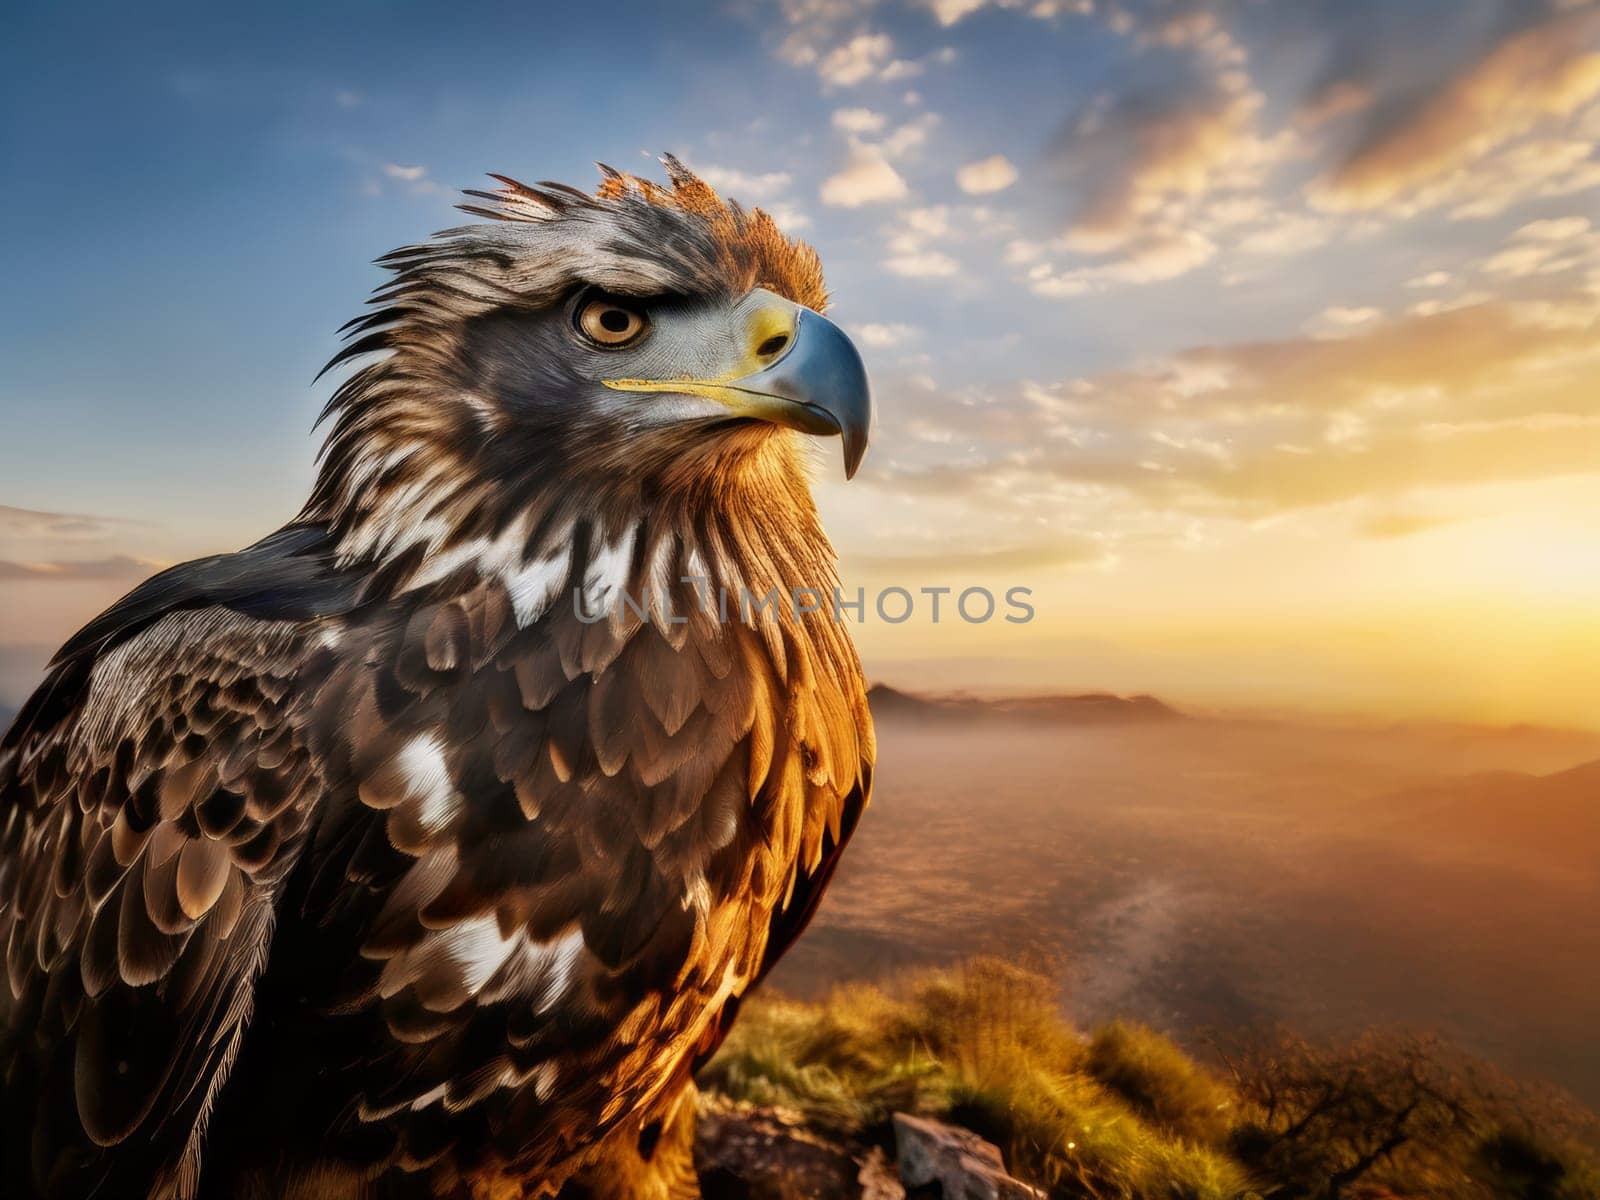 Big eagle close up portrait by fascinadora